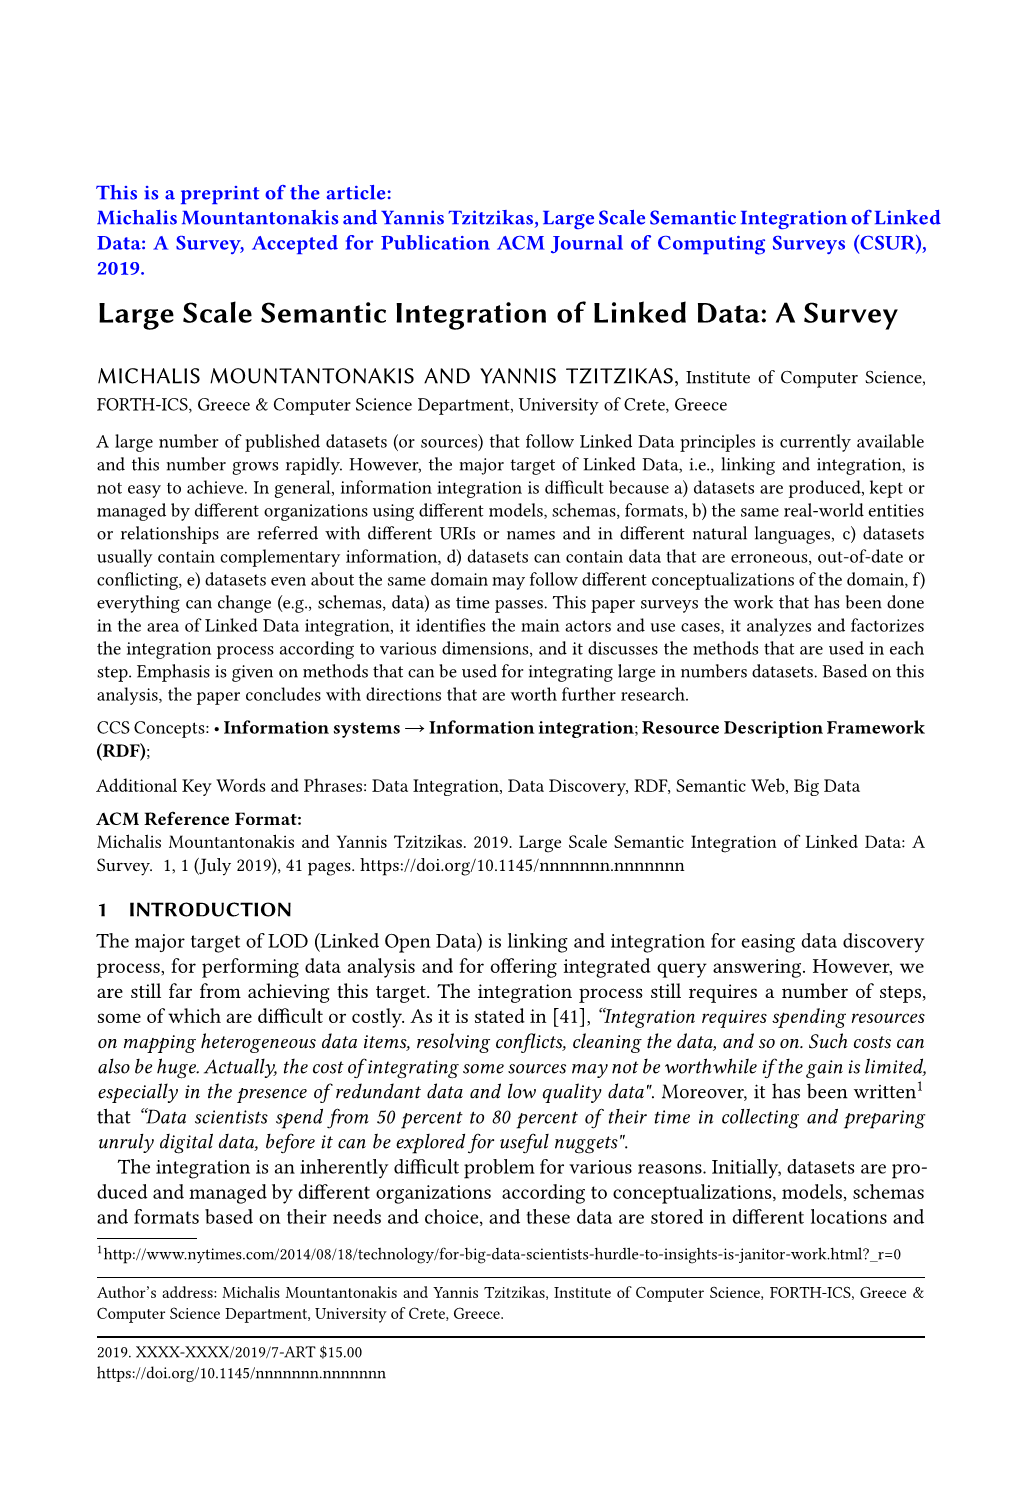 Large Scale Semantic Integration of Linked Data: a Survey, Accepted for Publication ACM Journal of Computing Surveys (CSUR), 2019